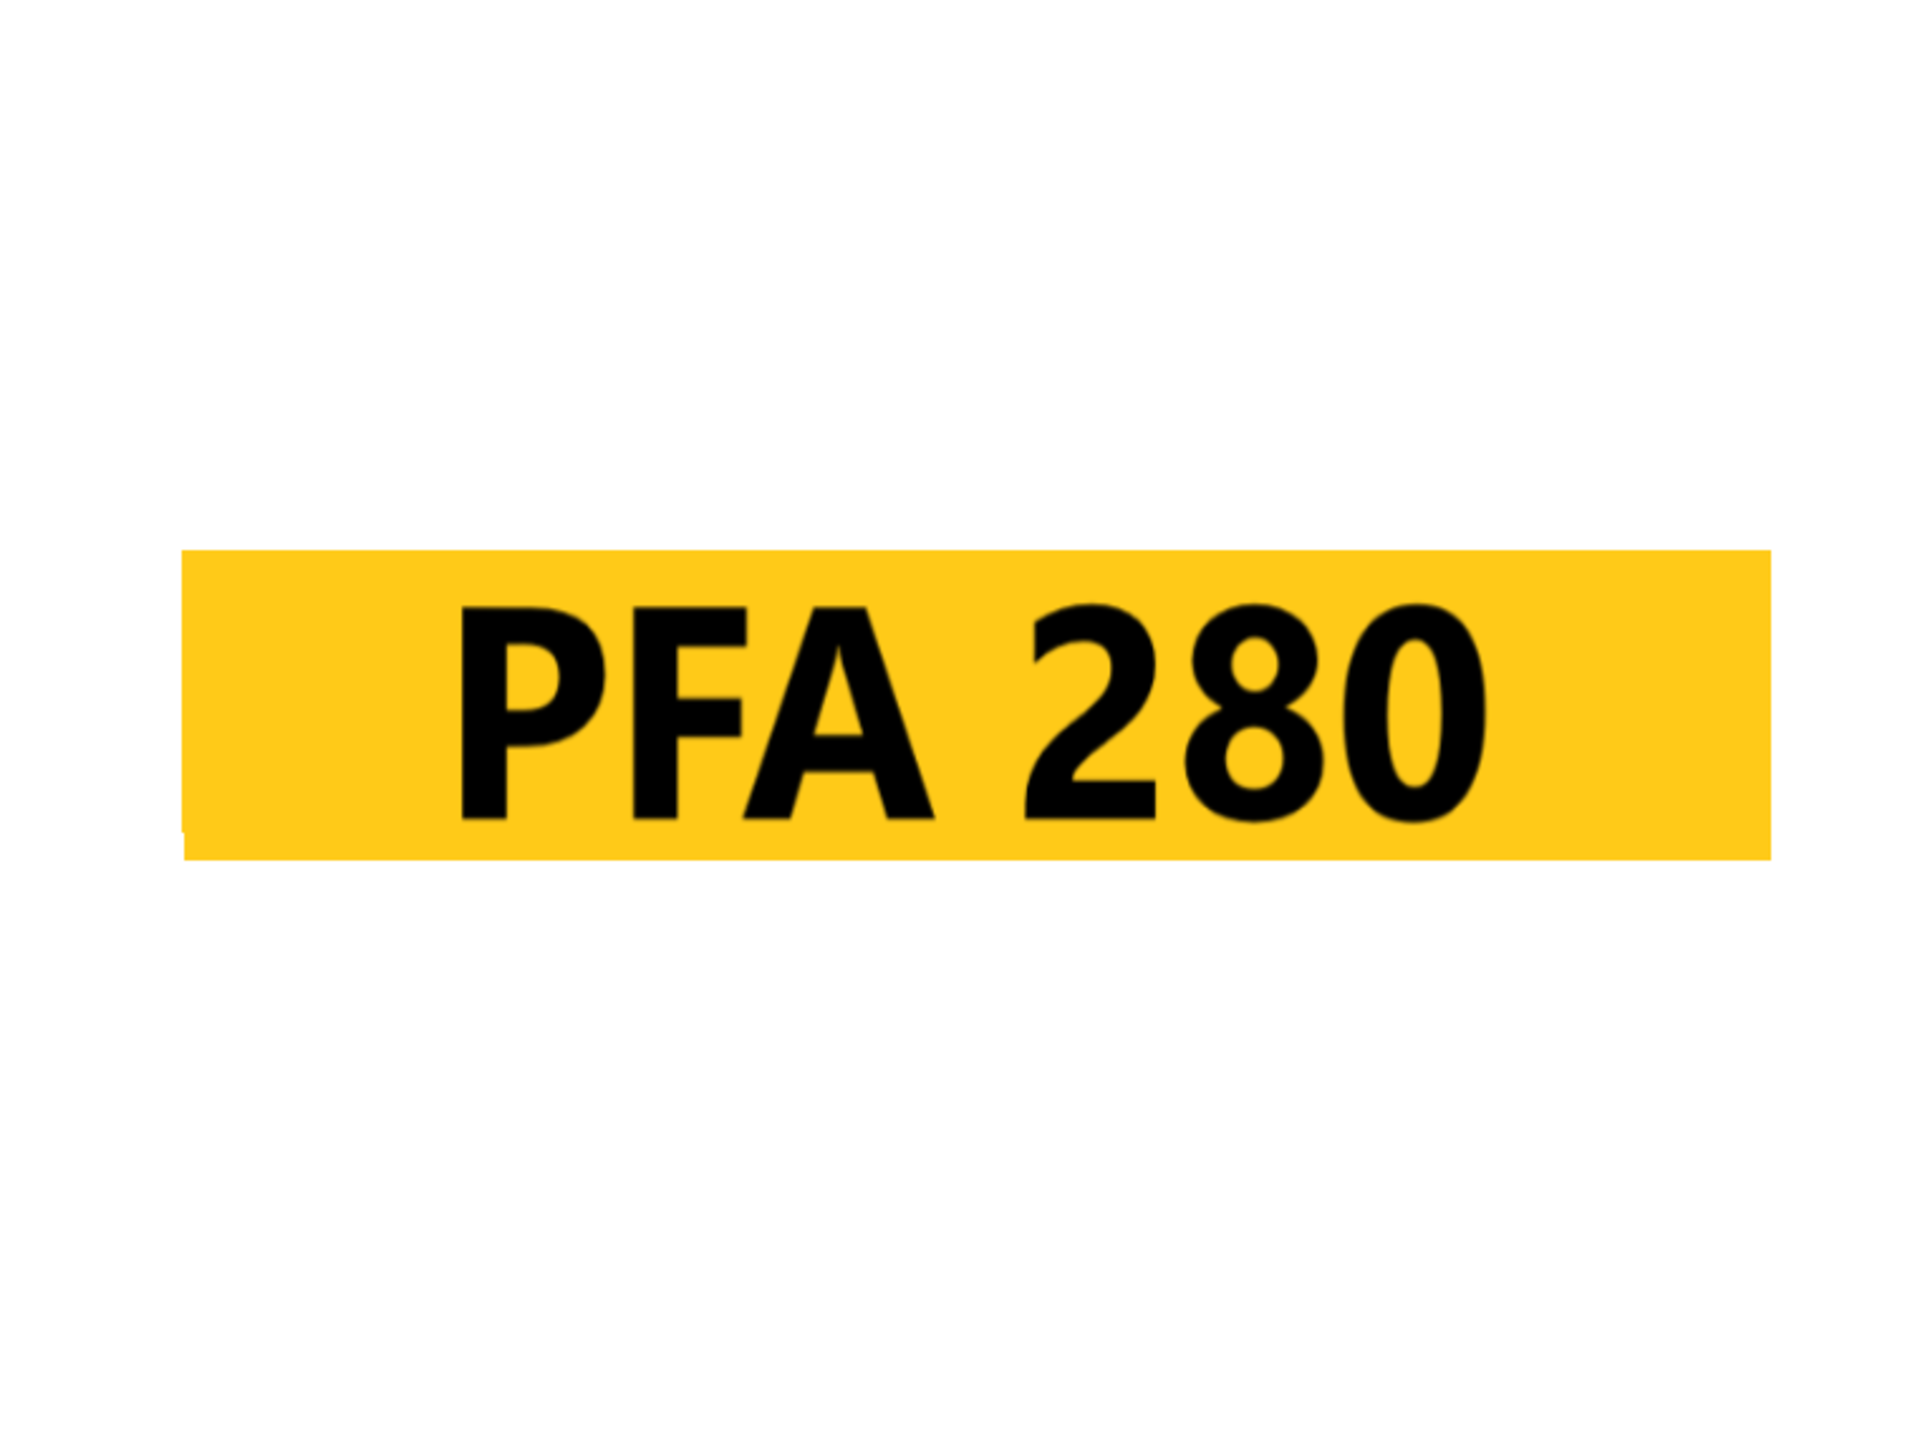 Cherished Registration Number PFA 280 On Retention Certificate